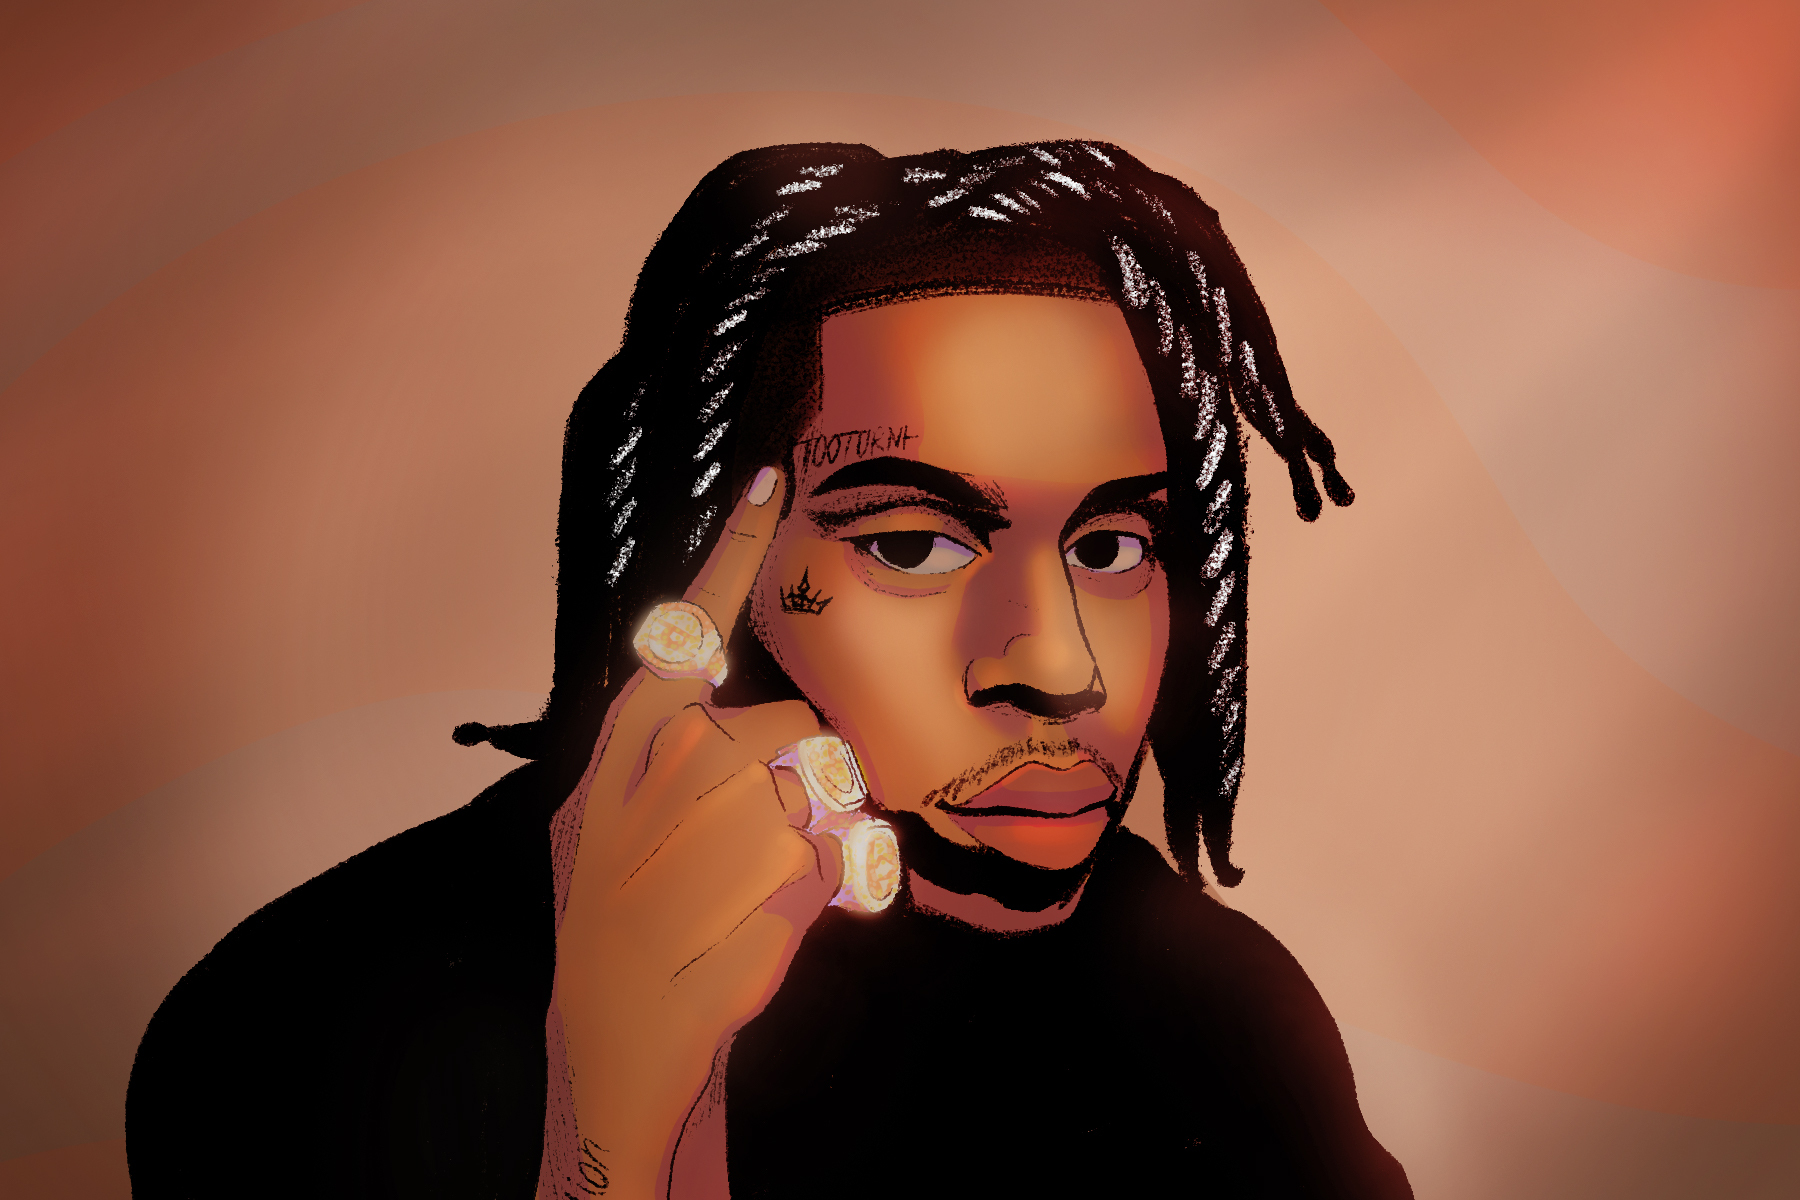 An art piece of rap artist Polo G against a brown background. (Illustration by Yana Ramos Cutrim, George Fox University)